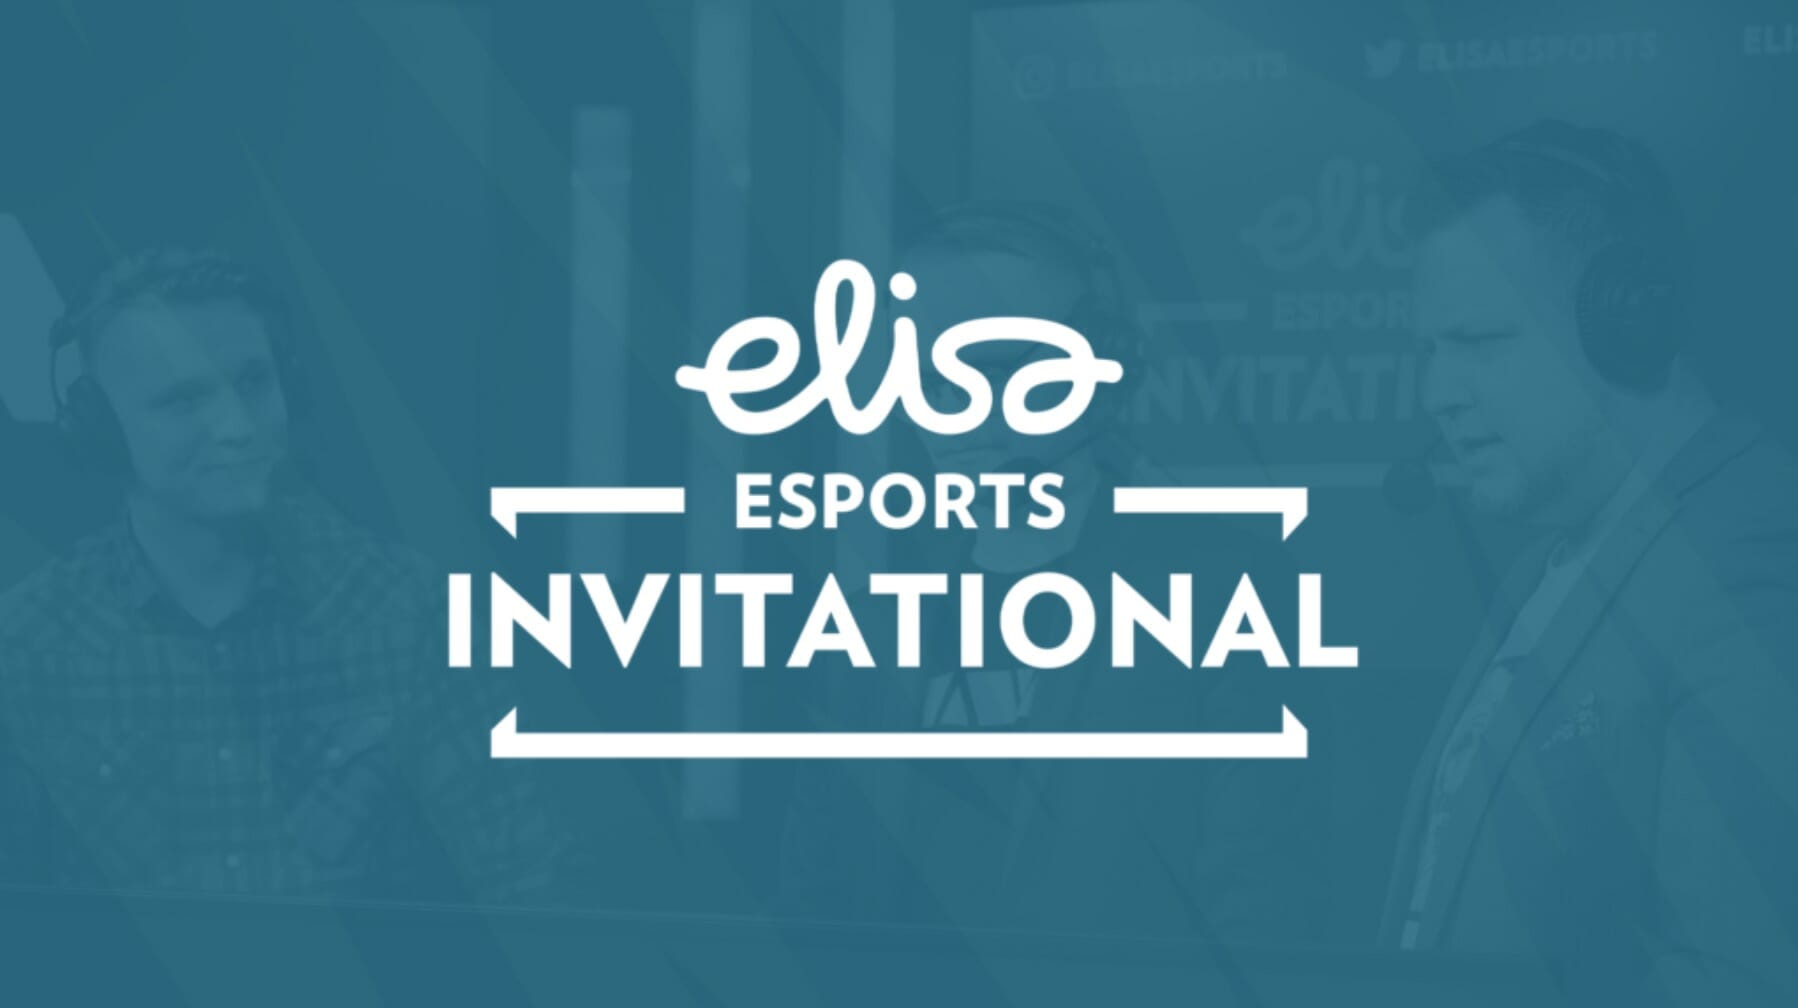 Elisa esports インビテーショナル